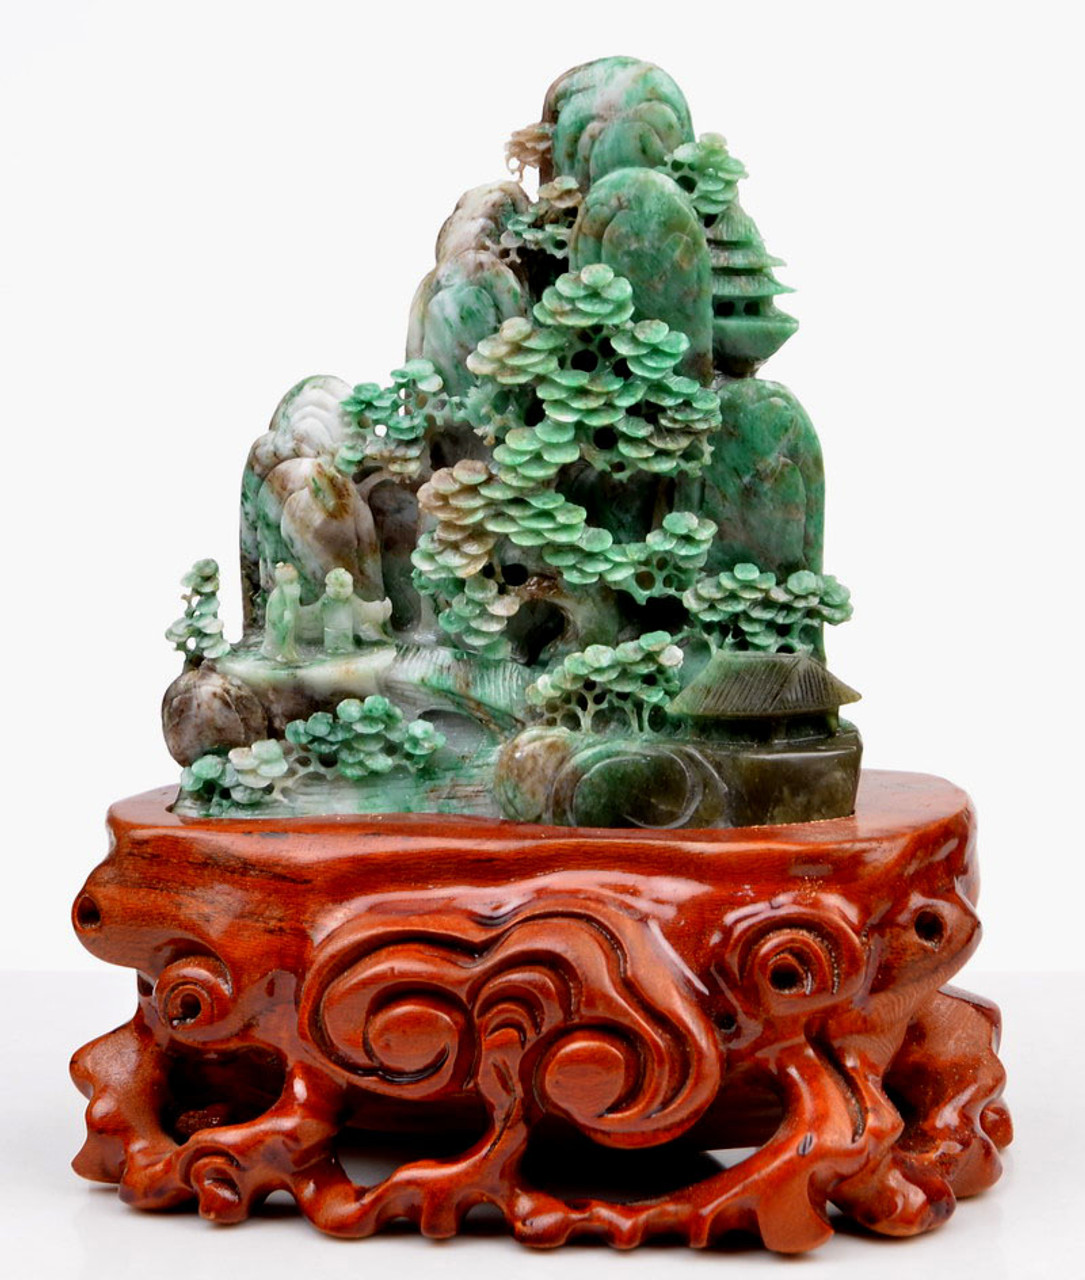 Dushan Jade carving